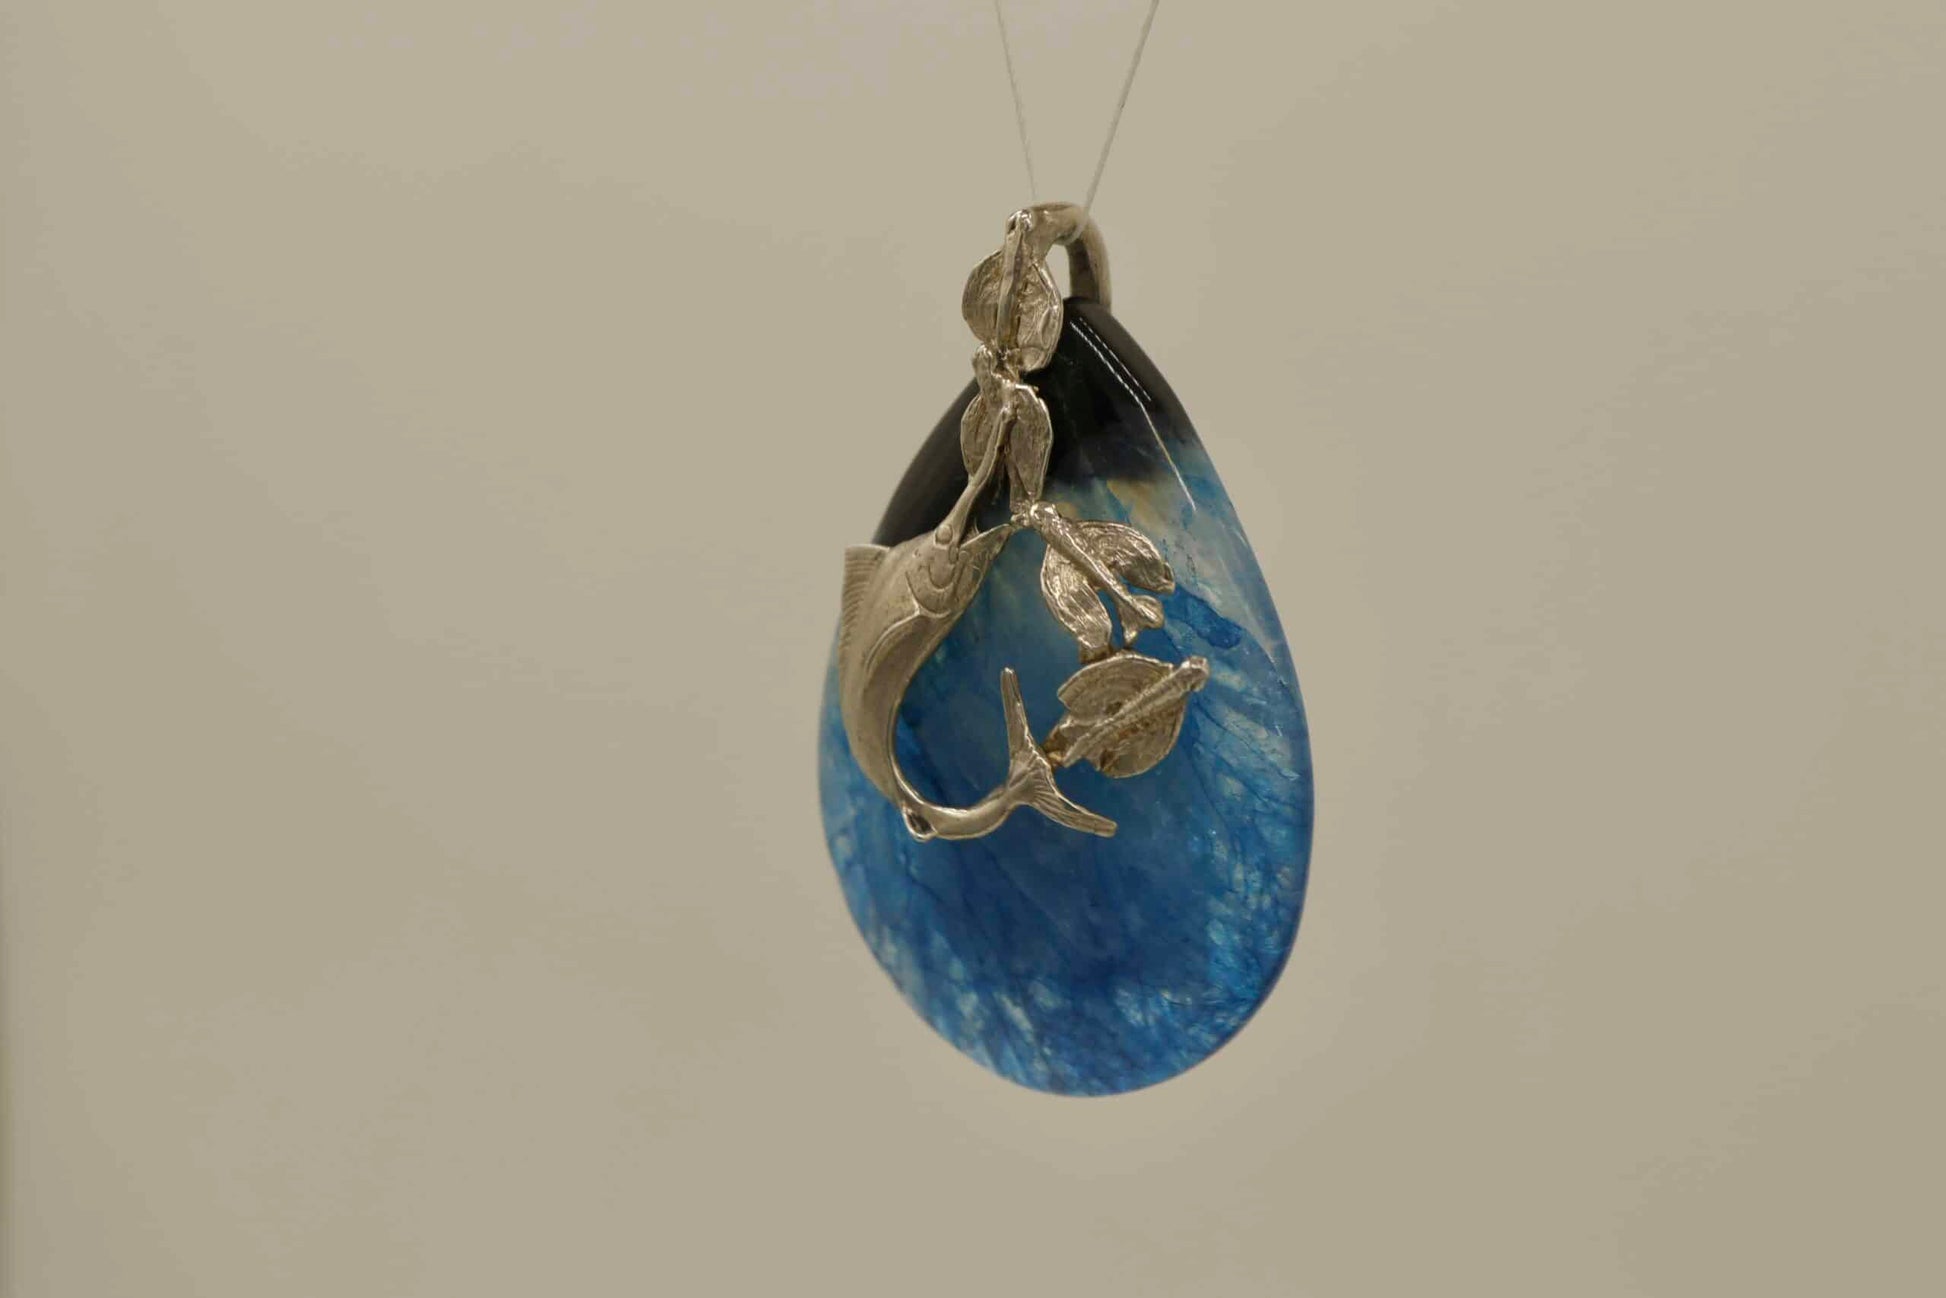 silnova marlin atop blue agate